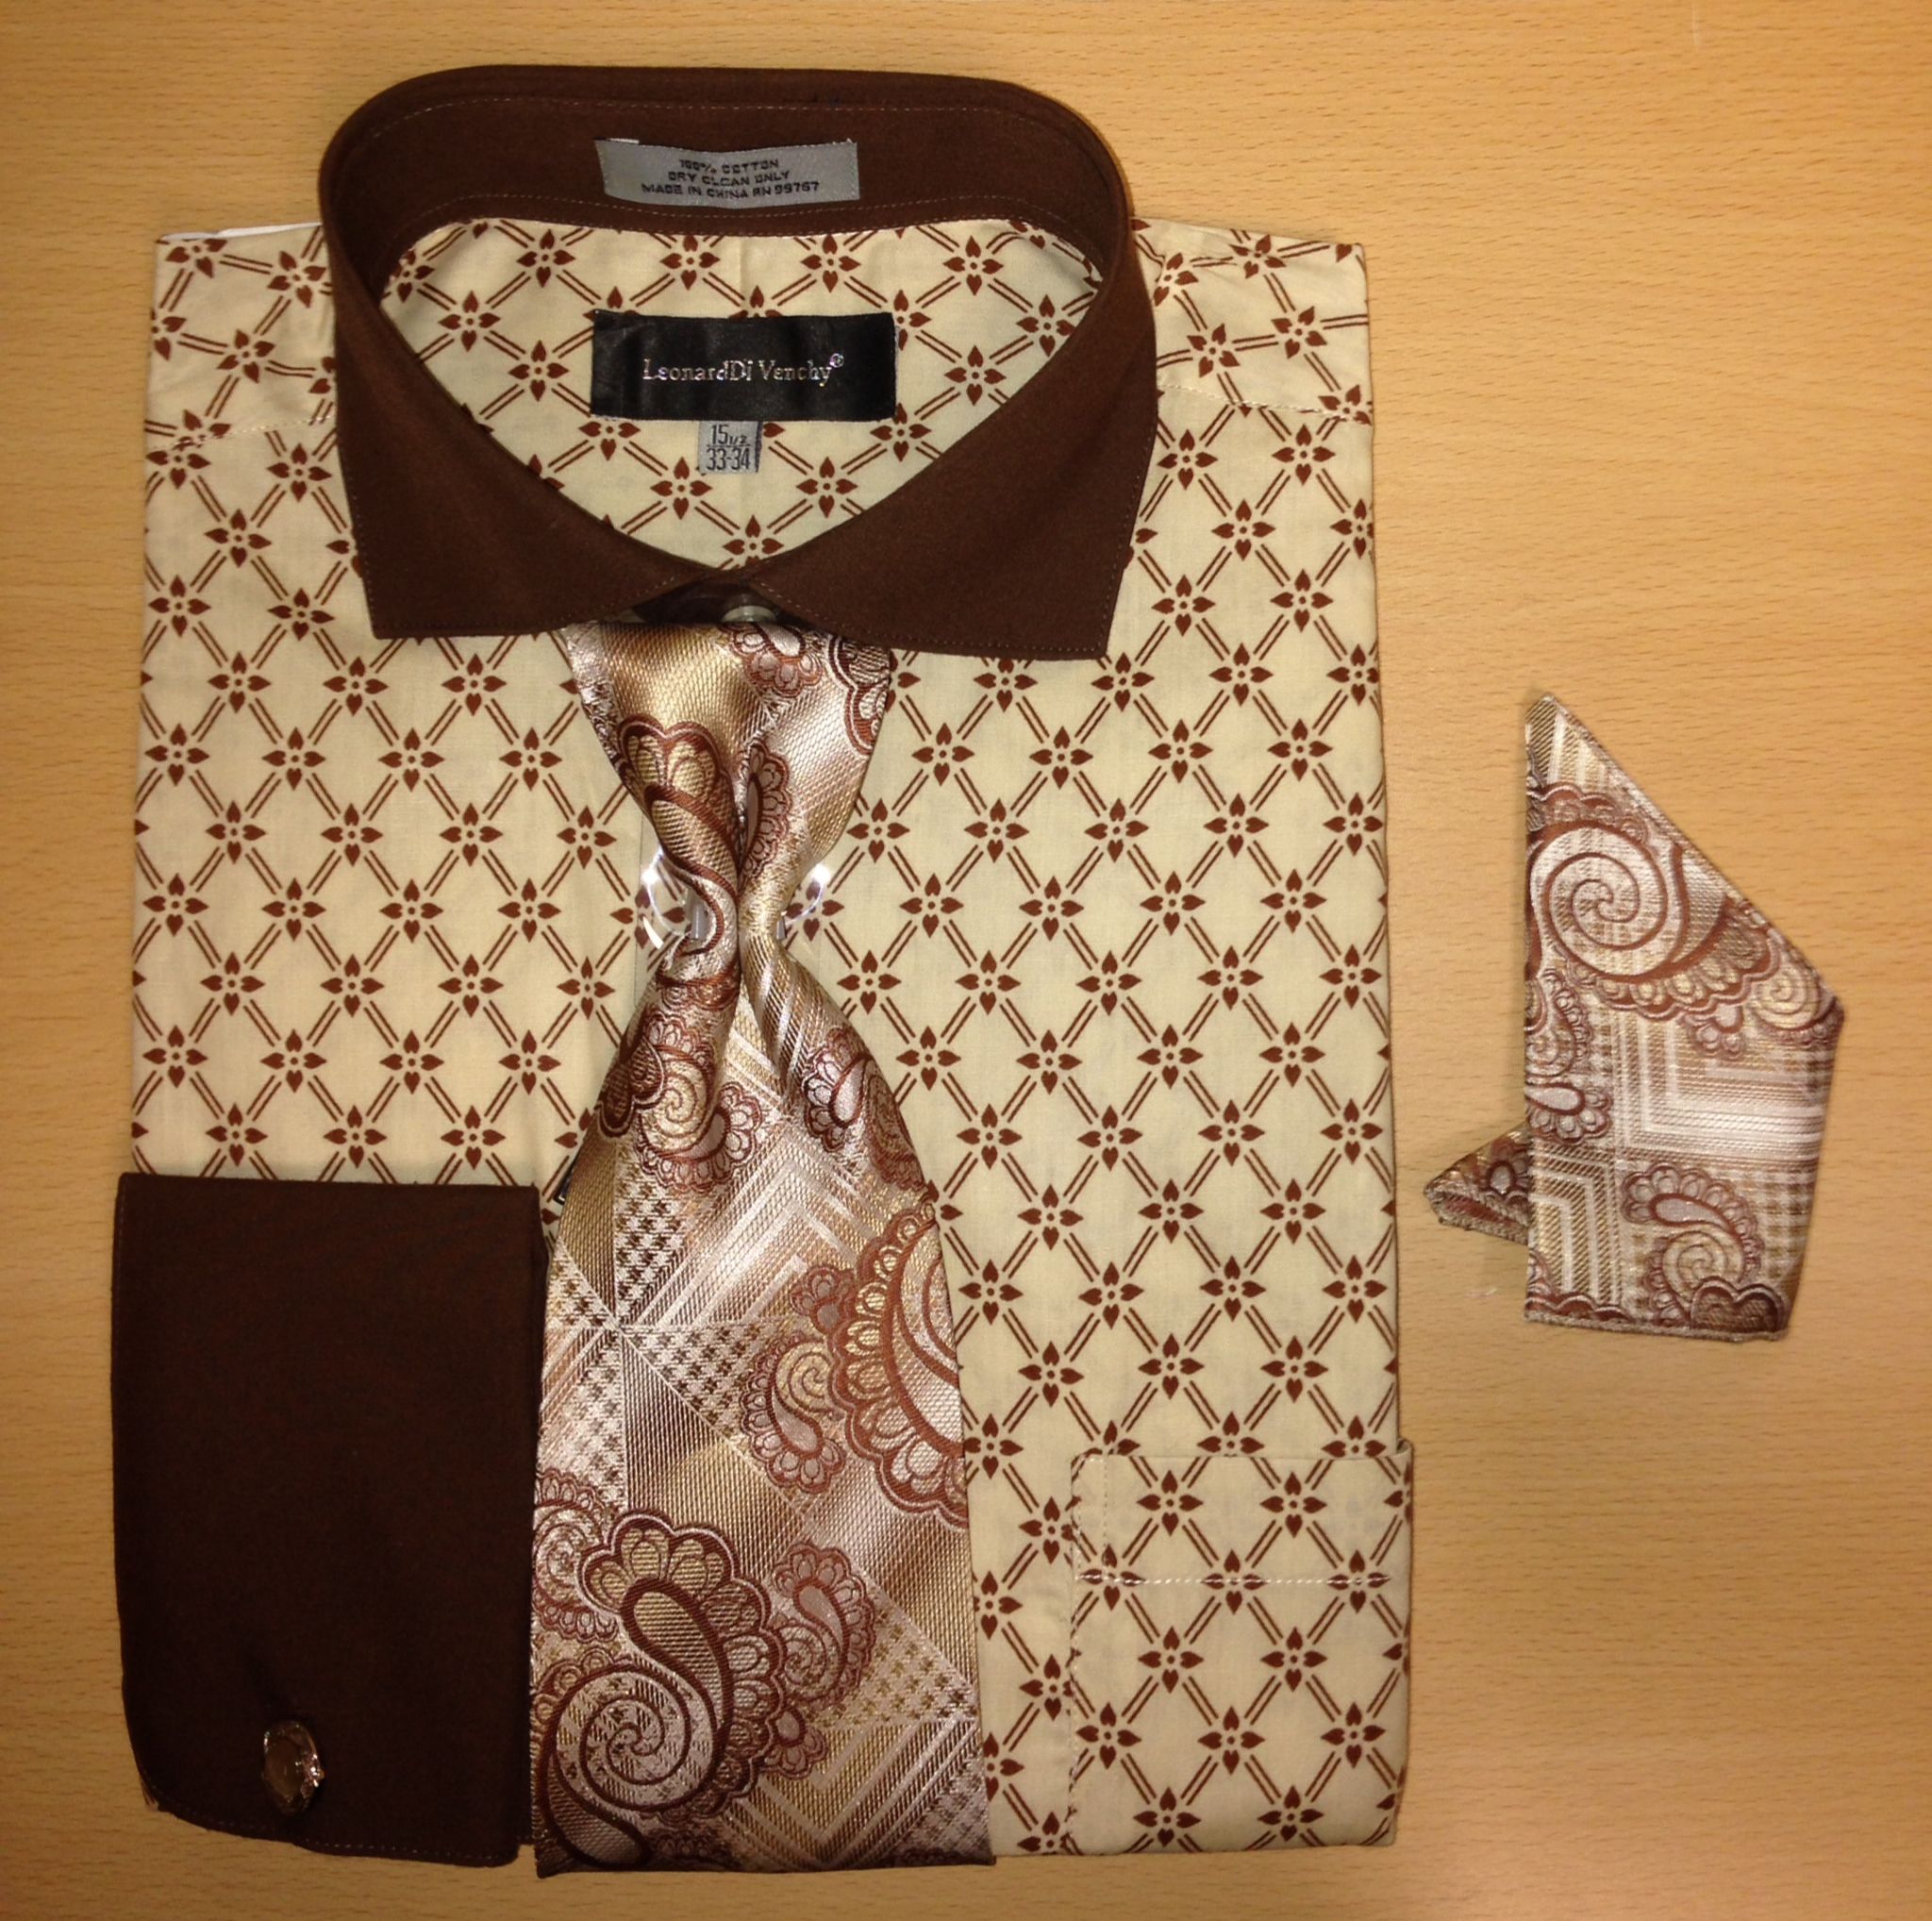 Men's Fashion Diamond Chain Dot Print Cufflink Dress Shirt Set - Brown and Tan